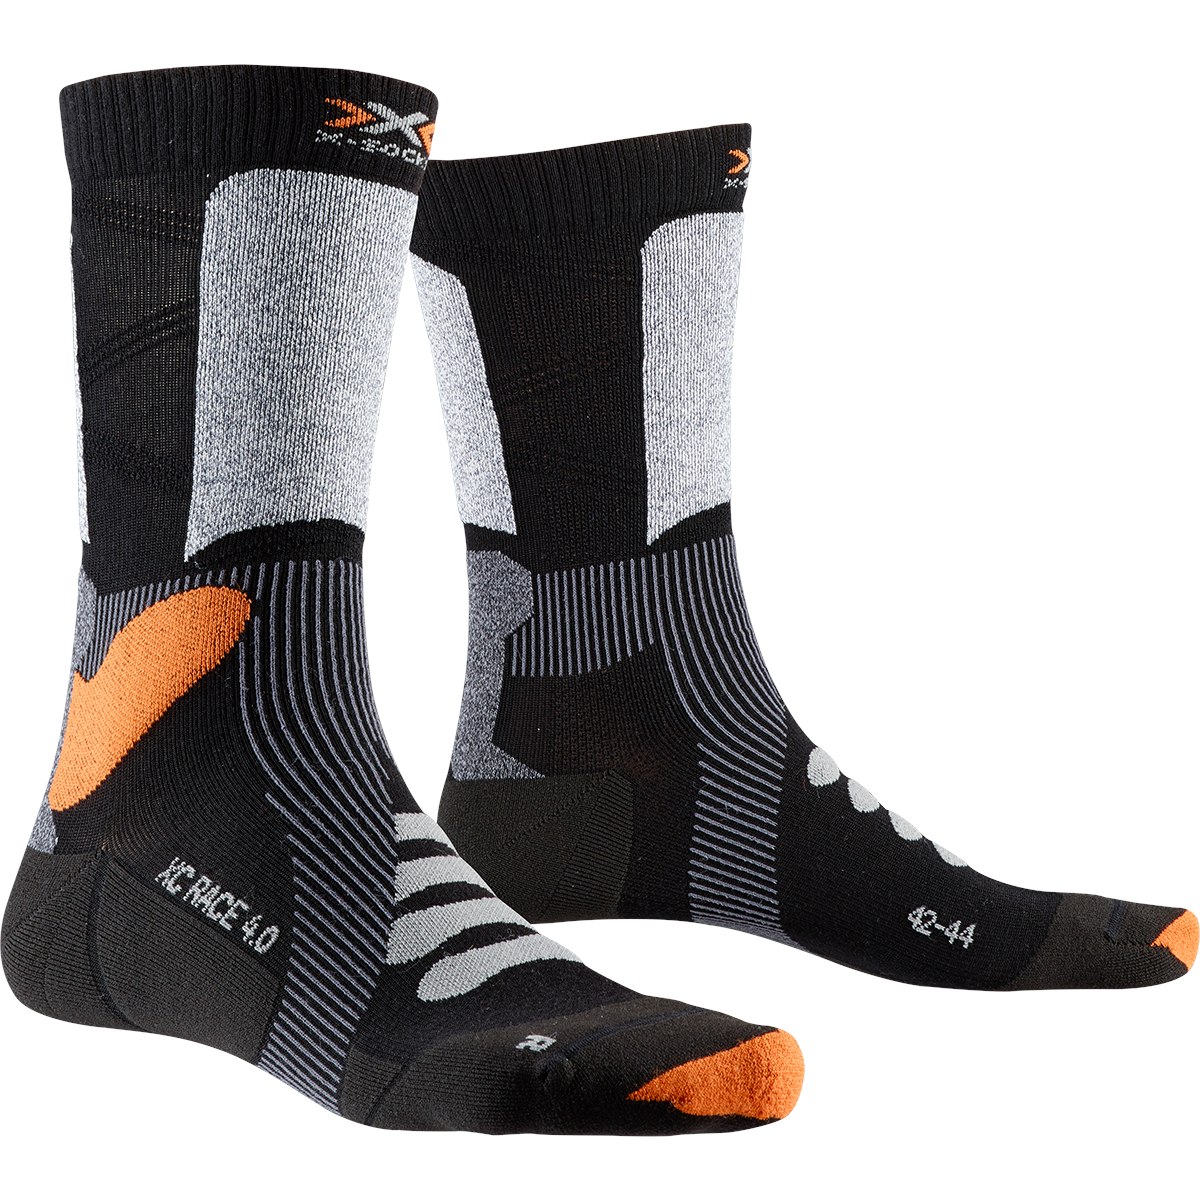 Productfoto van X-Socks X-Country Race 4.0 Socks - black/stone grey melange